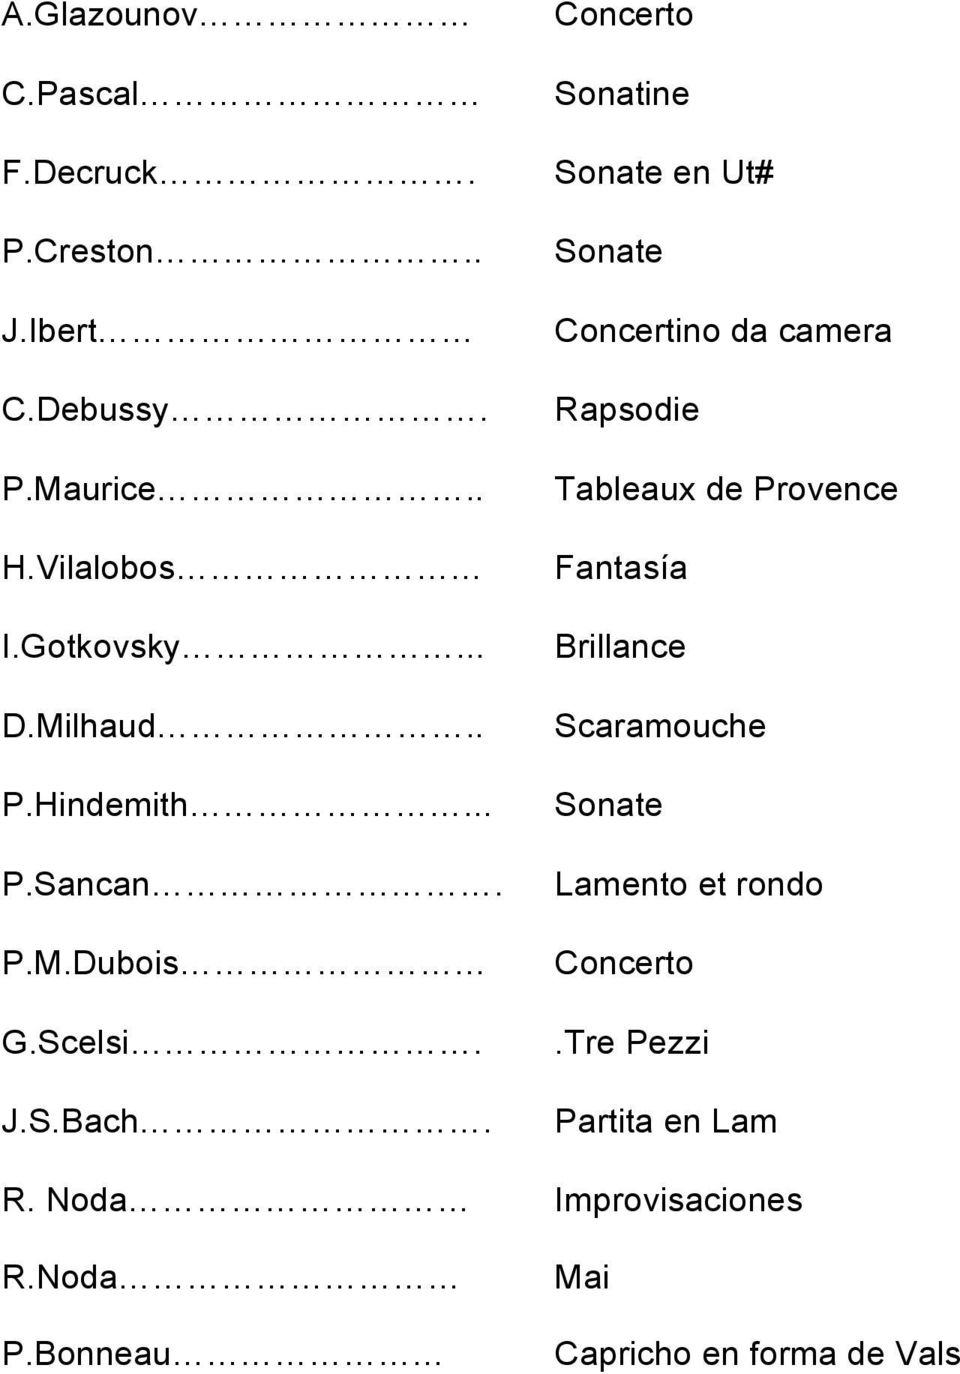 Concerto Sonatine Sonate en Ut# Sonate Concertino da camera Rapsodie Tableaux de Provence Fantasía